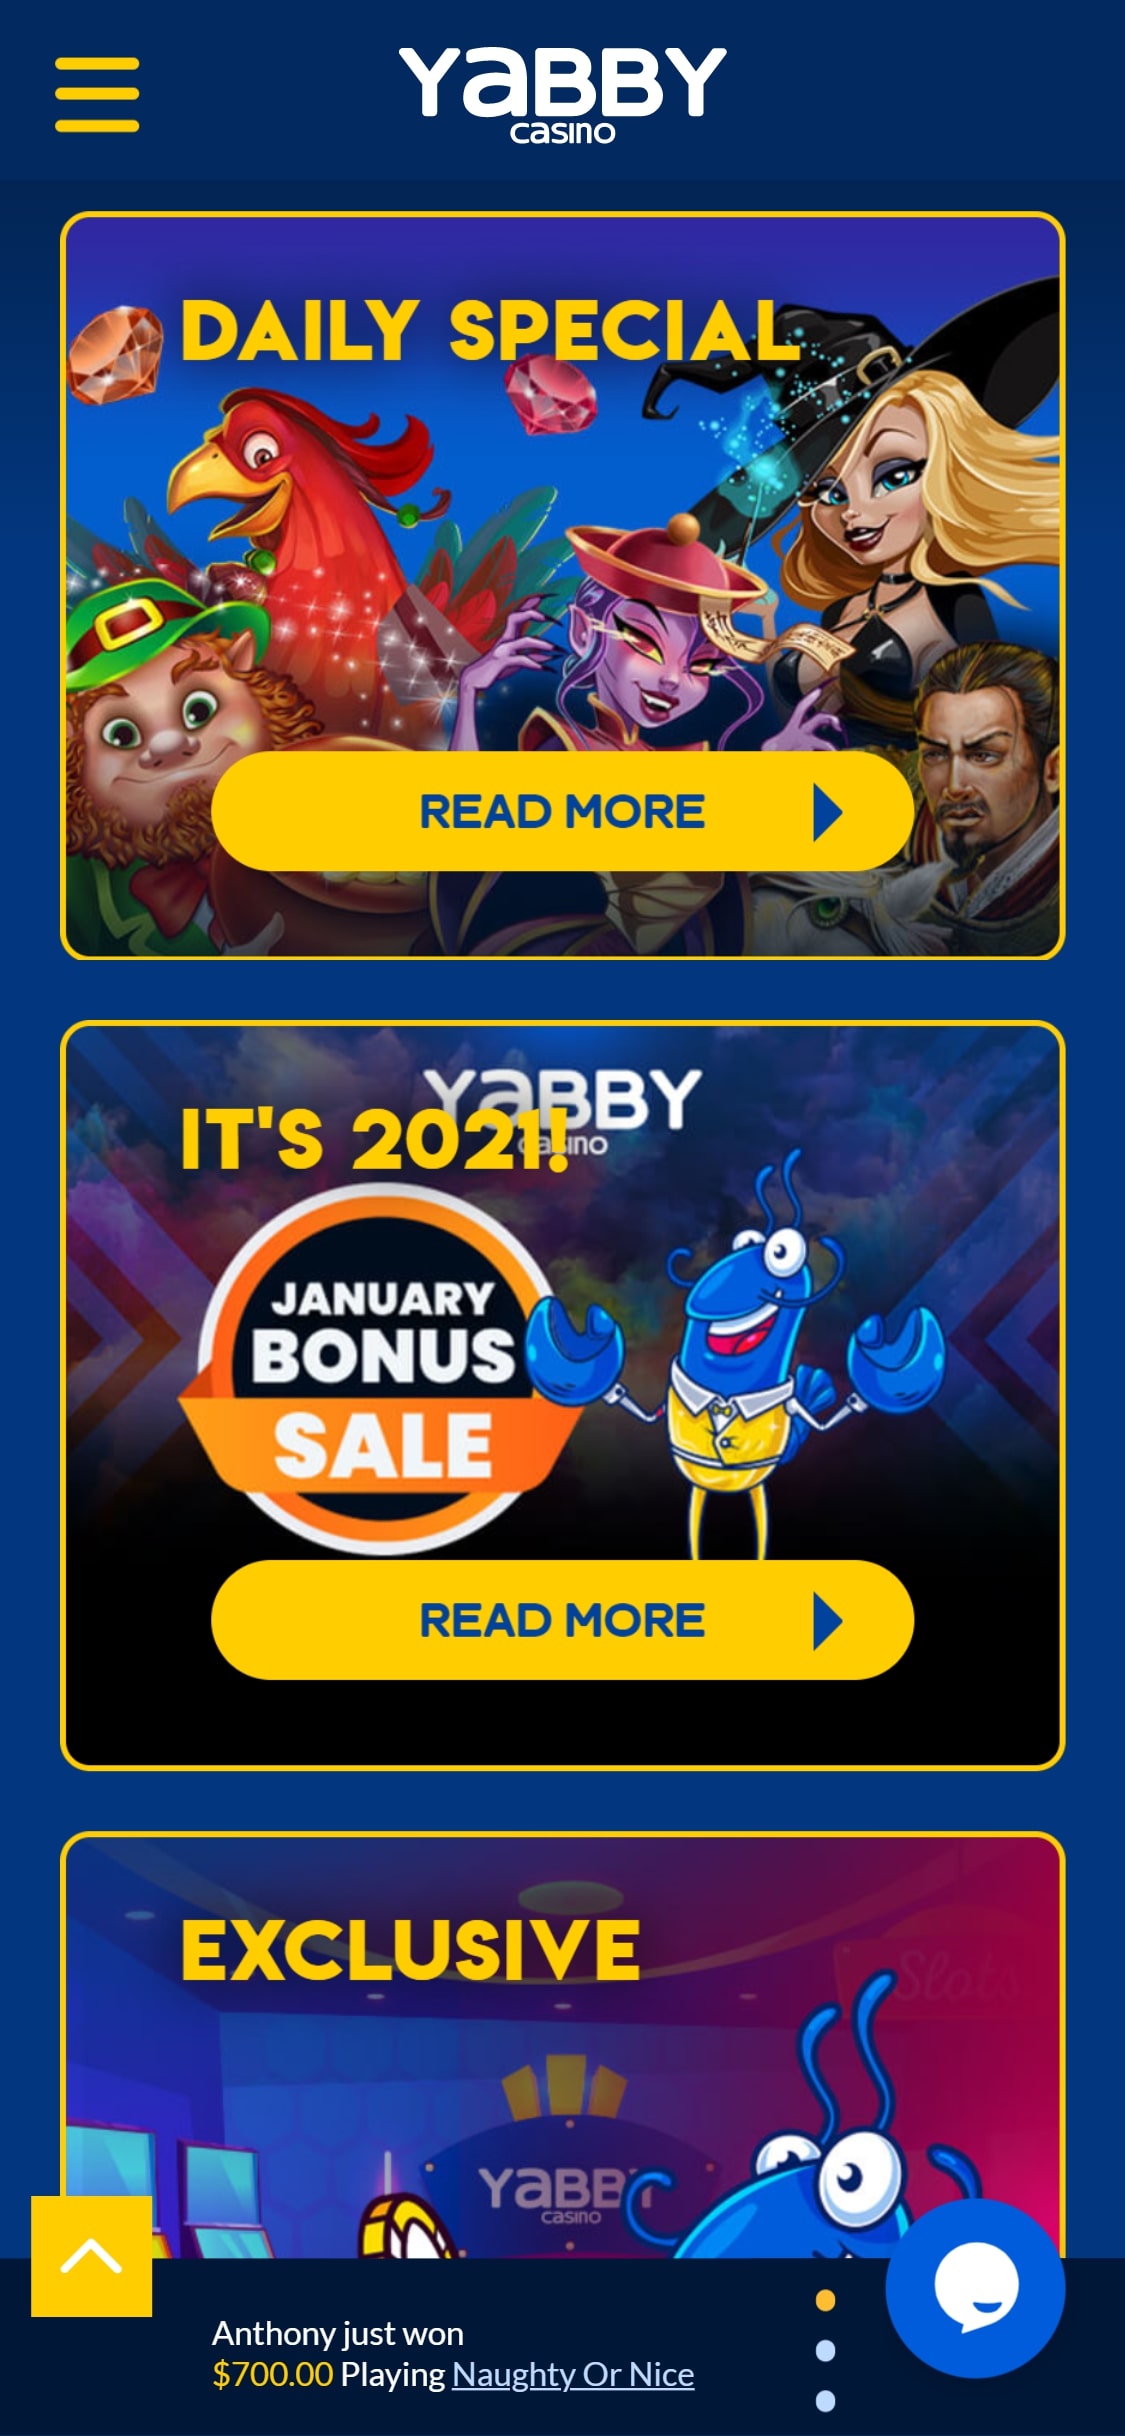 Yabby Casino Mobile No Deposit Bonus Review